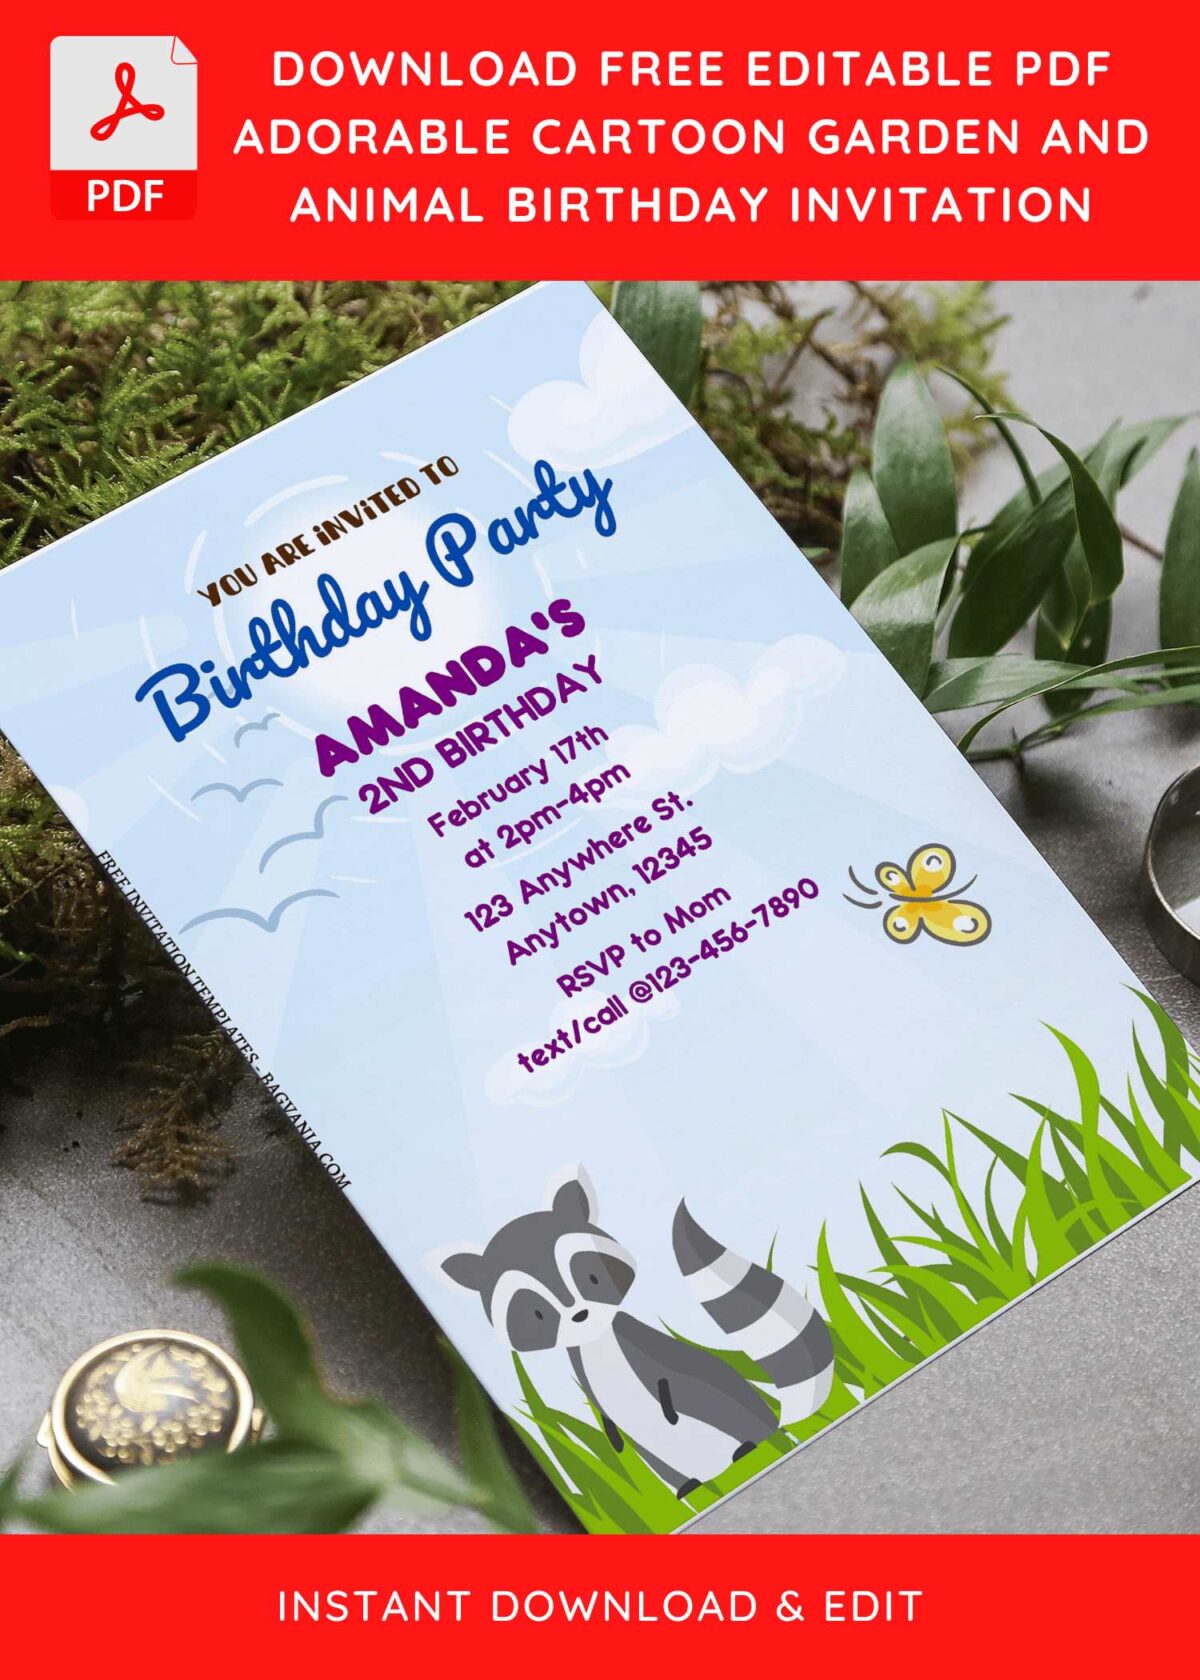 (Free Editable PDF) Creative And Fun Woodland Birthday Invitation Templates F